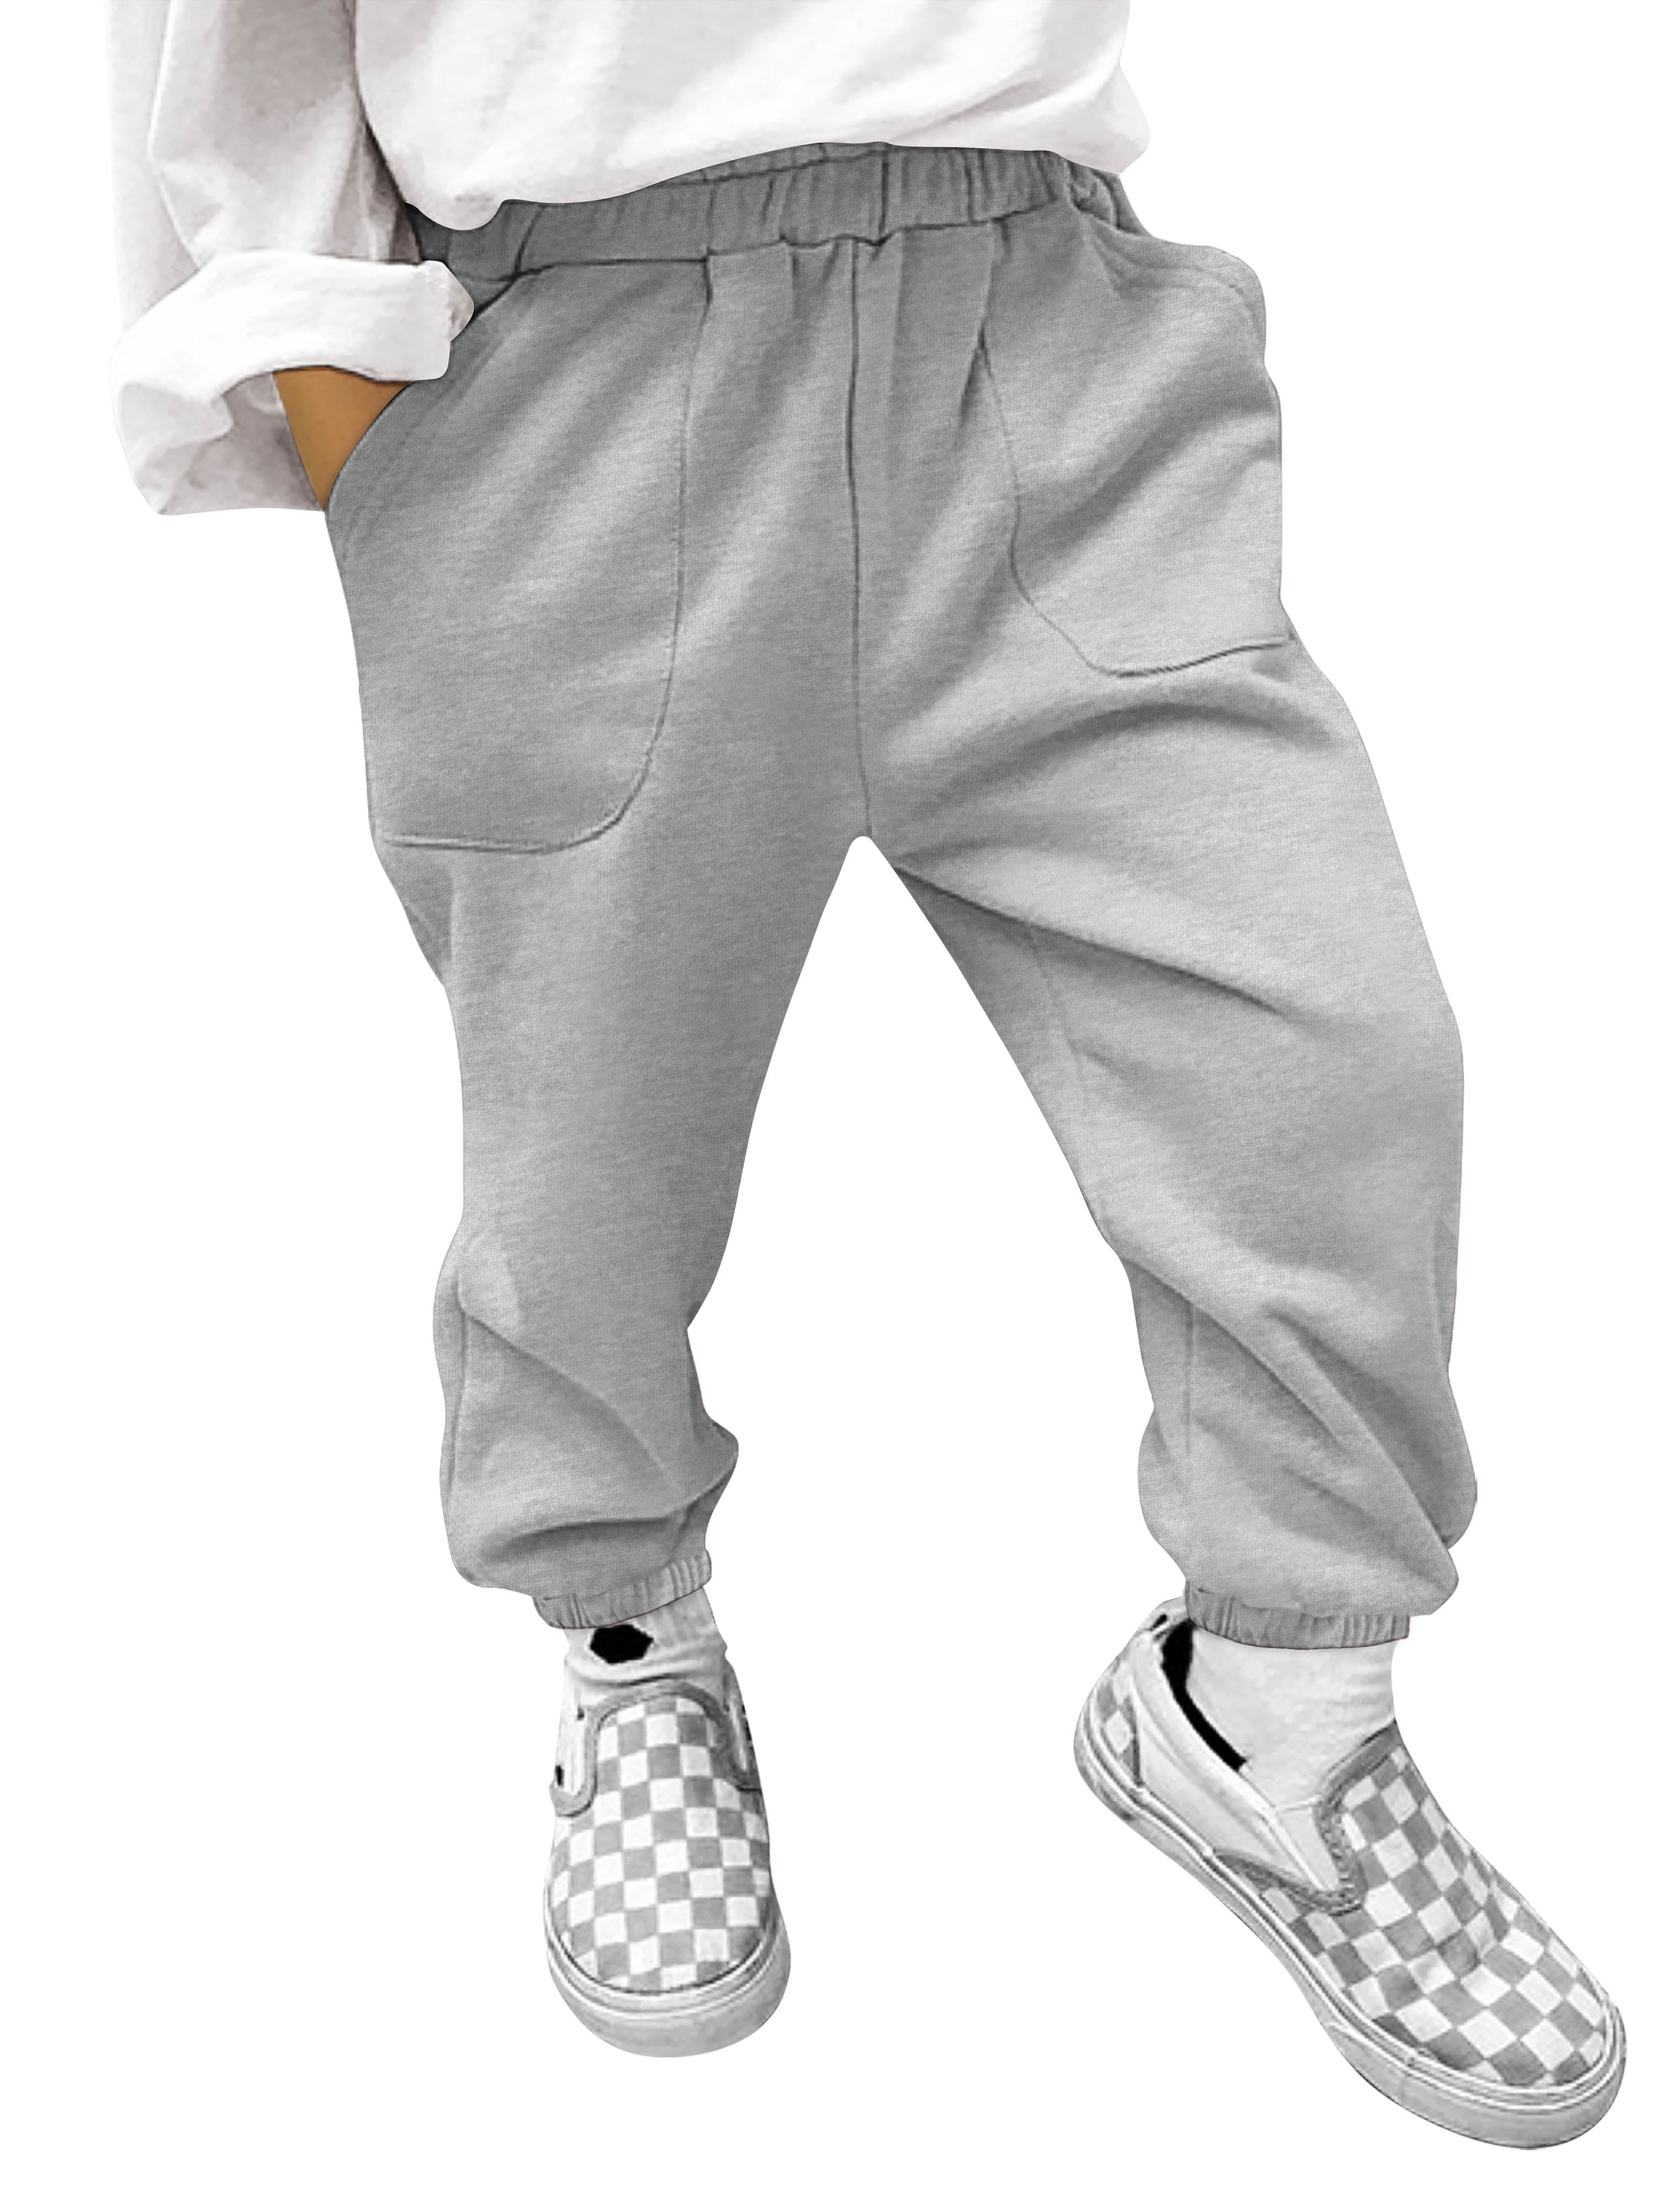 Kids and Toddler Premium Soft Sweatpants Boys Elastic Fleece Pants 2-16 Years 